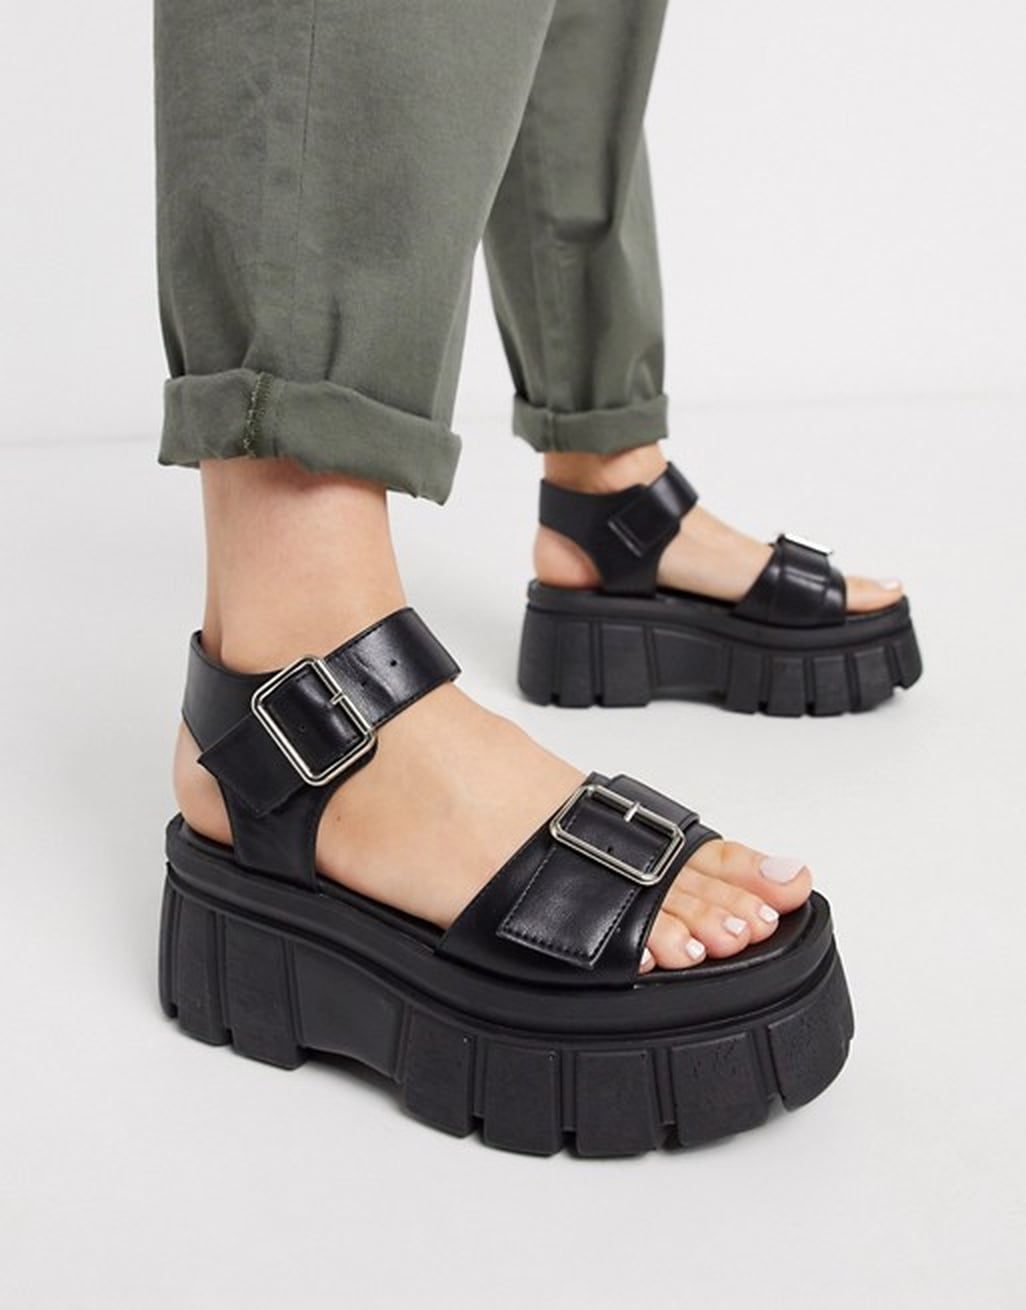 How to Wear Chunky Sandals | POPSUGAR Fashion